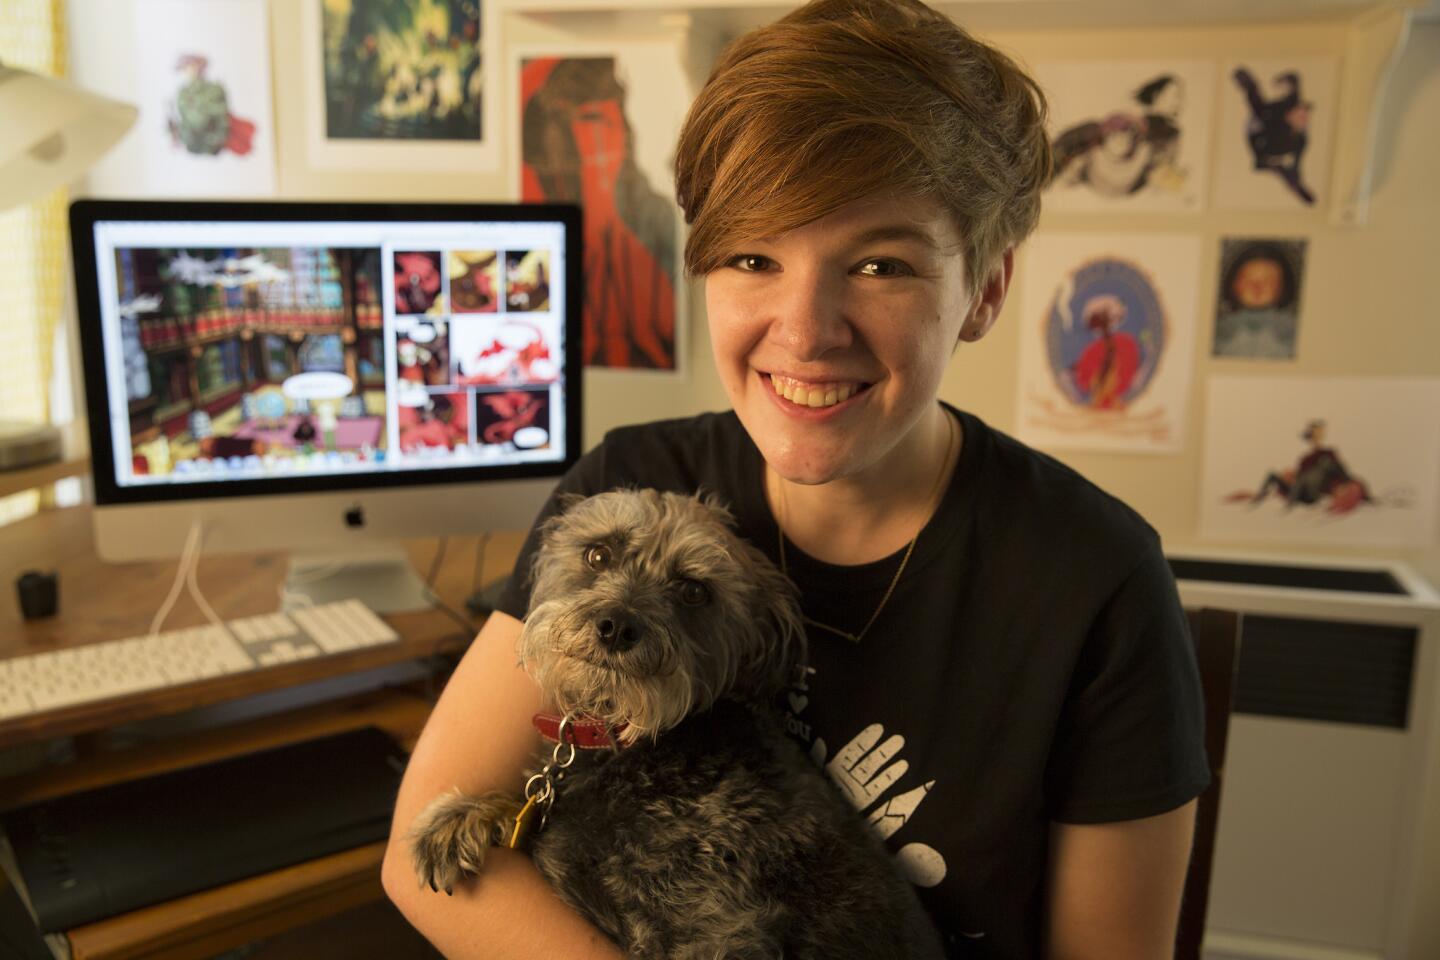 Author and artist Noelle Stevenson with her dog Winston.